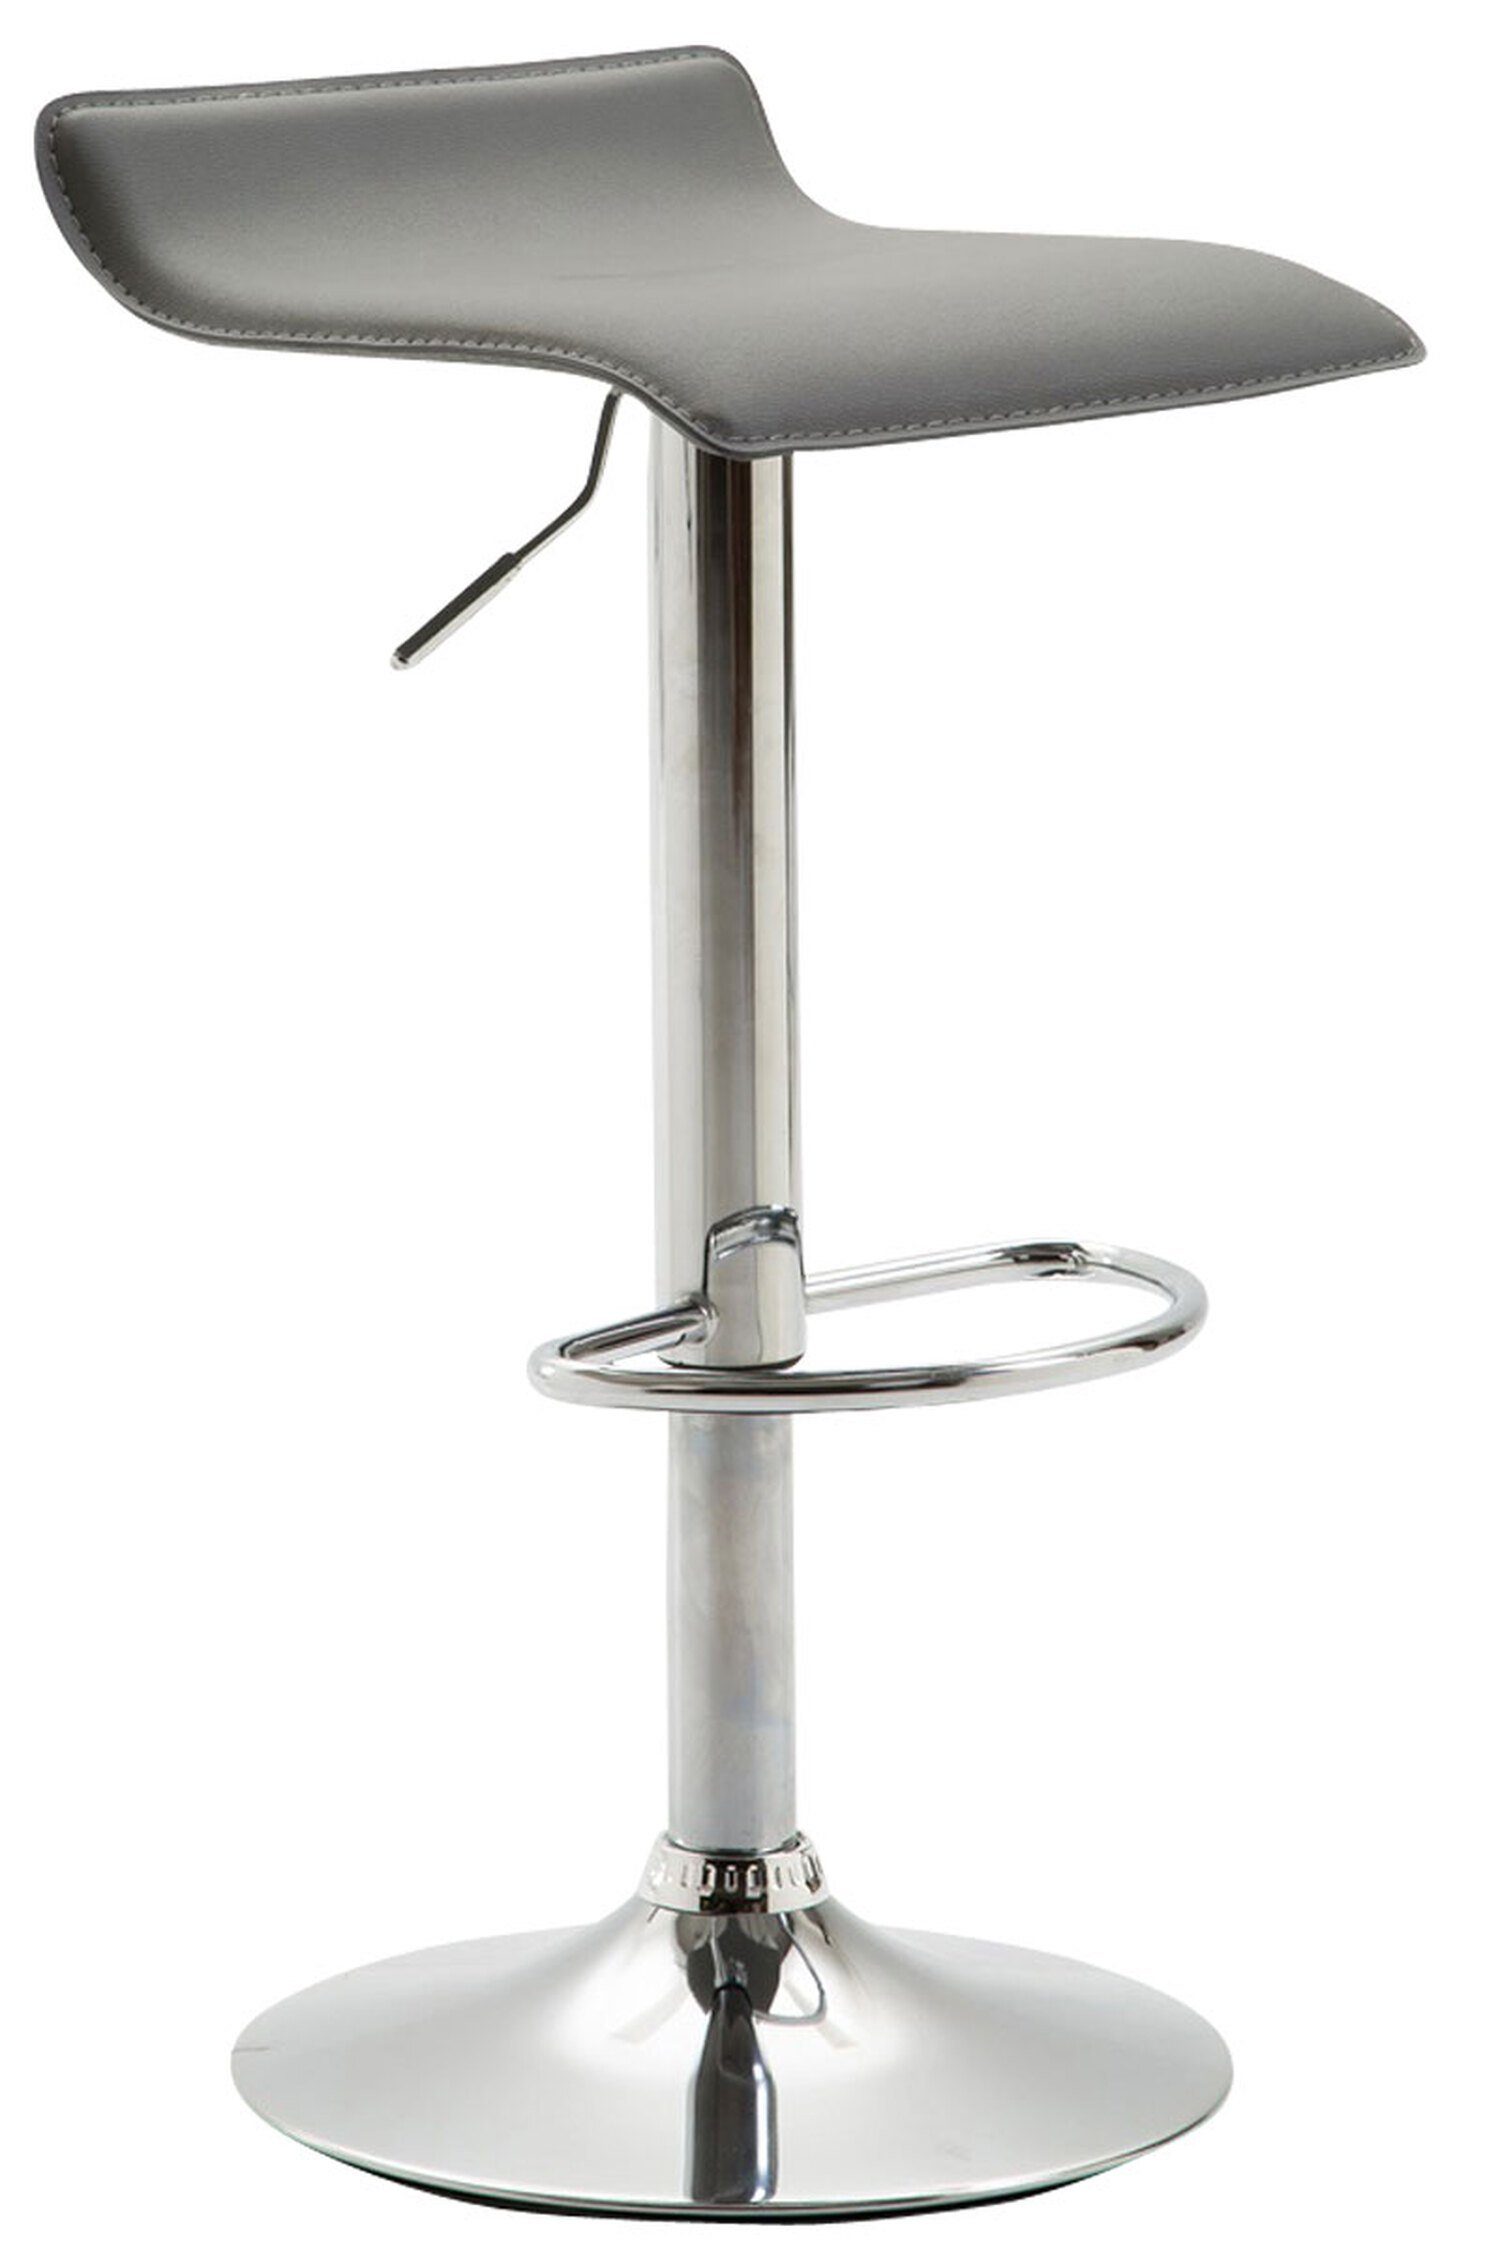 TPFLiving Barhocker Dynasty2 (mit Fußstütze - Barstuhl höhenverstellbar - Hocker für Theke & Küche), 360° drehbar - chromfarbener Stahl - Sitzfläche: Kunstleder Grau